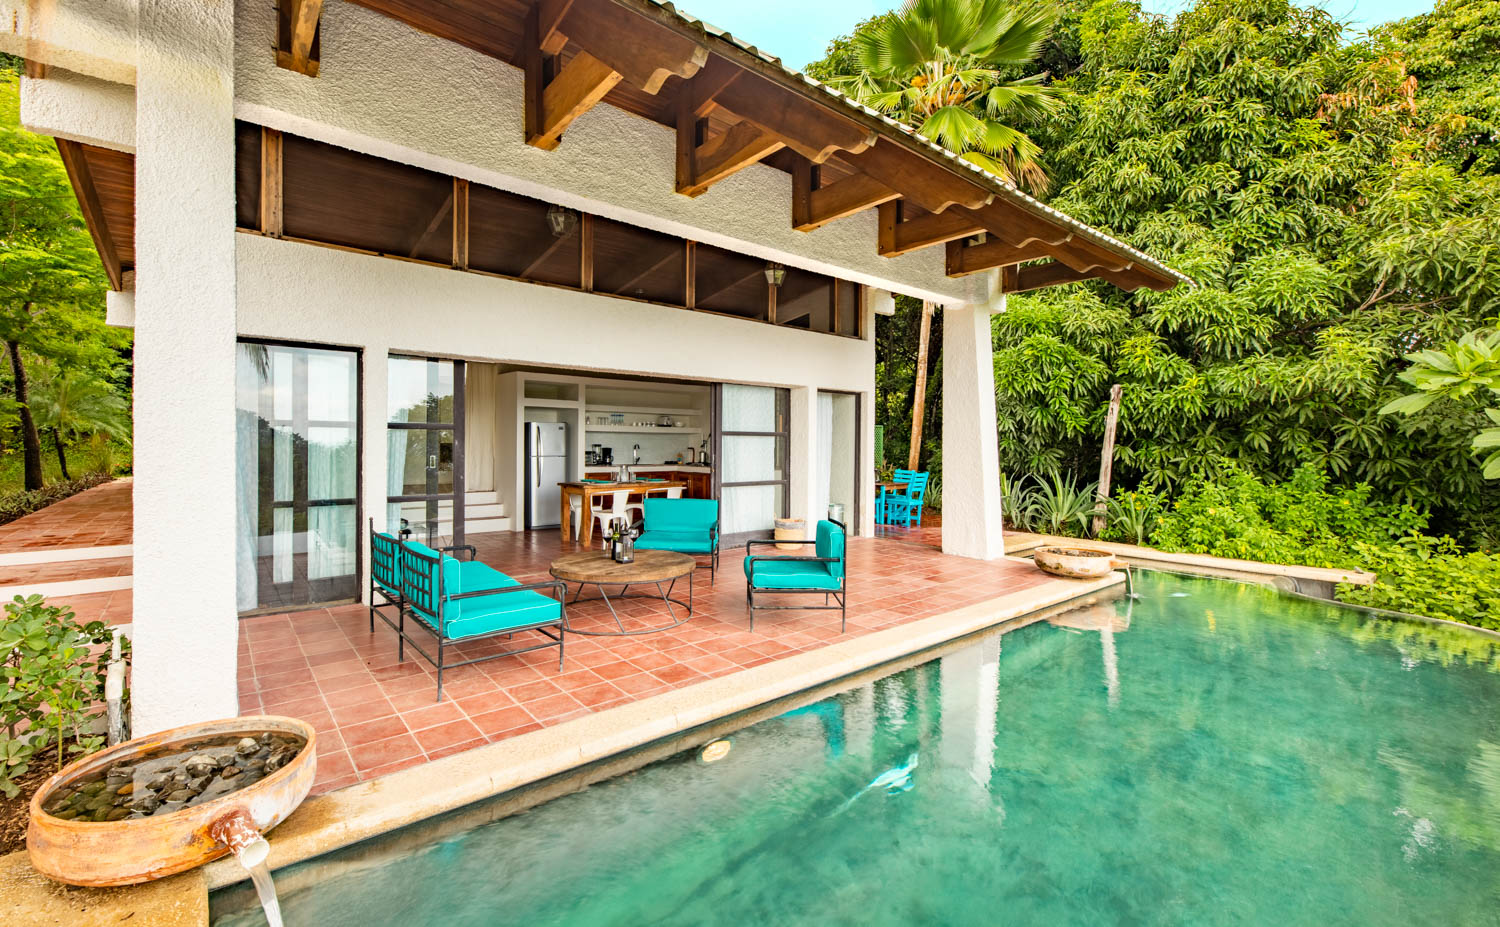 Casa-Harmony-Wanderlust-Realty-Real-Estate-Rentals-Nosara-Costa-Rica-4.jpg